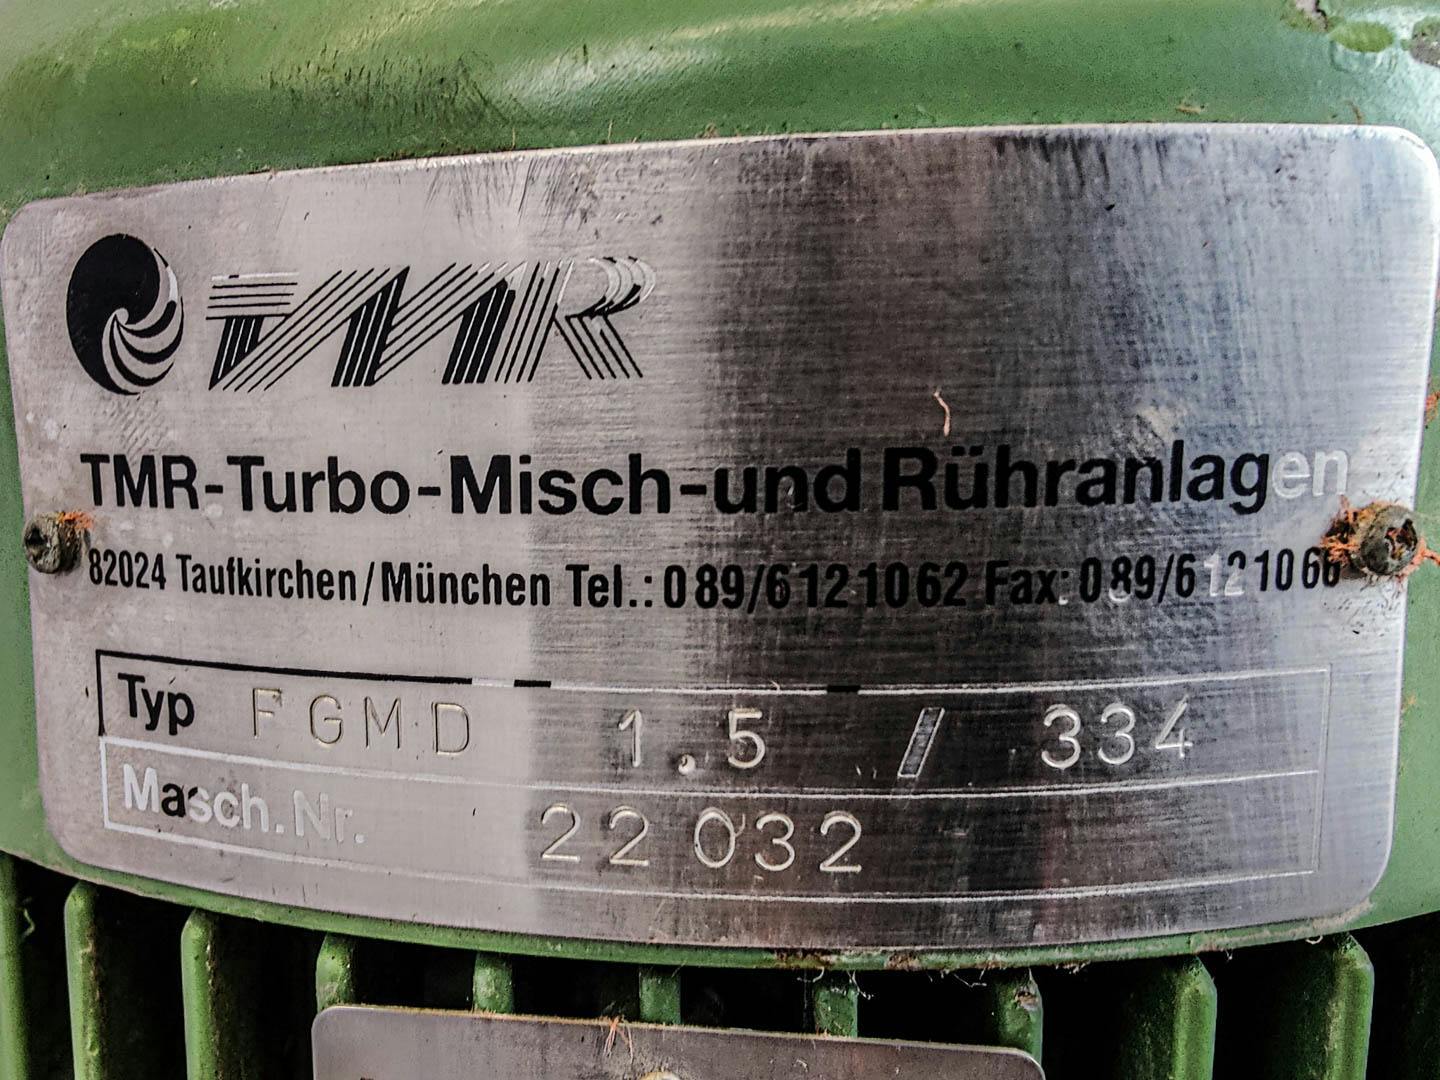 Ullmann & Co. 3000Ltr. with Martin empl mixer/stirrer - Rührkessel - image 10